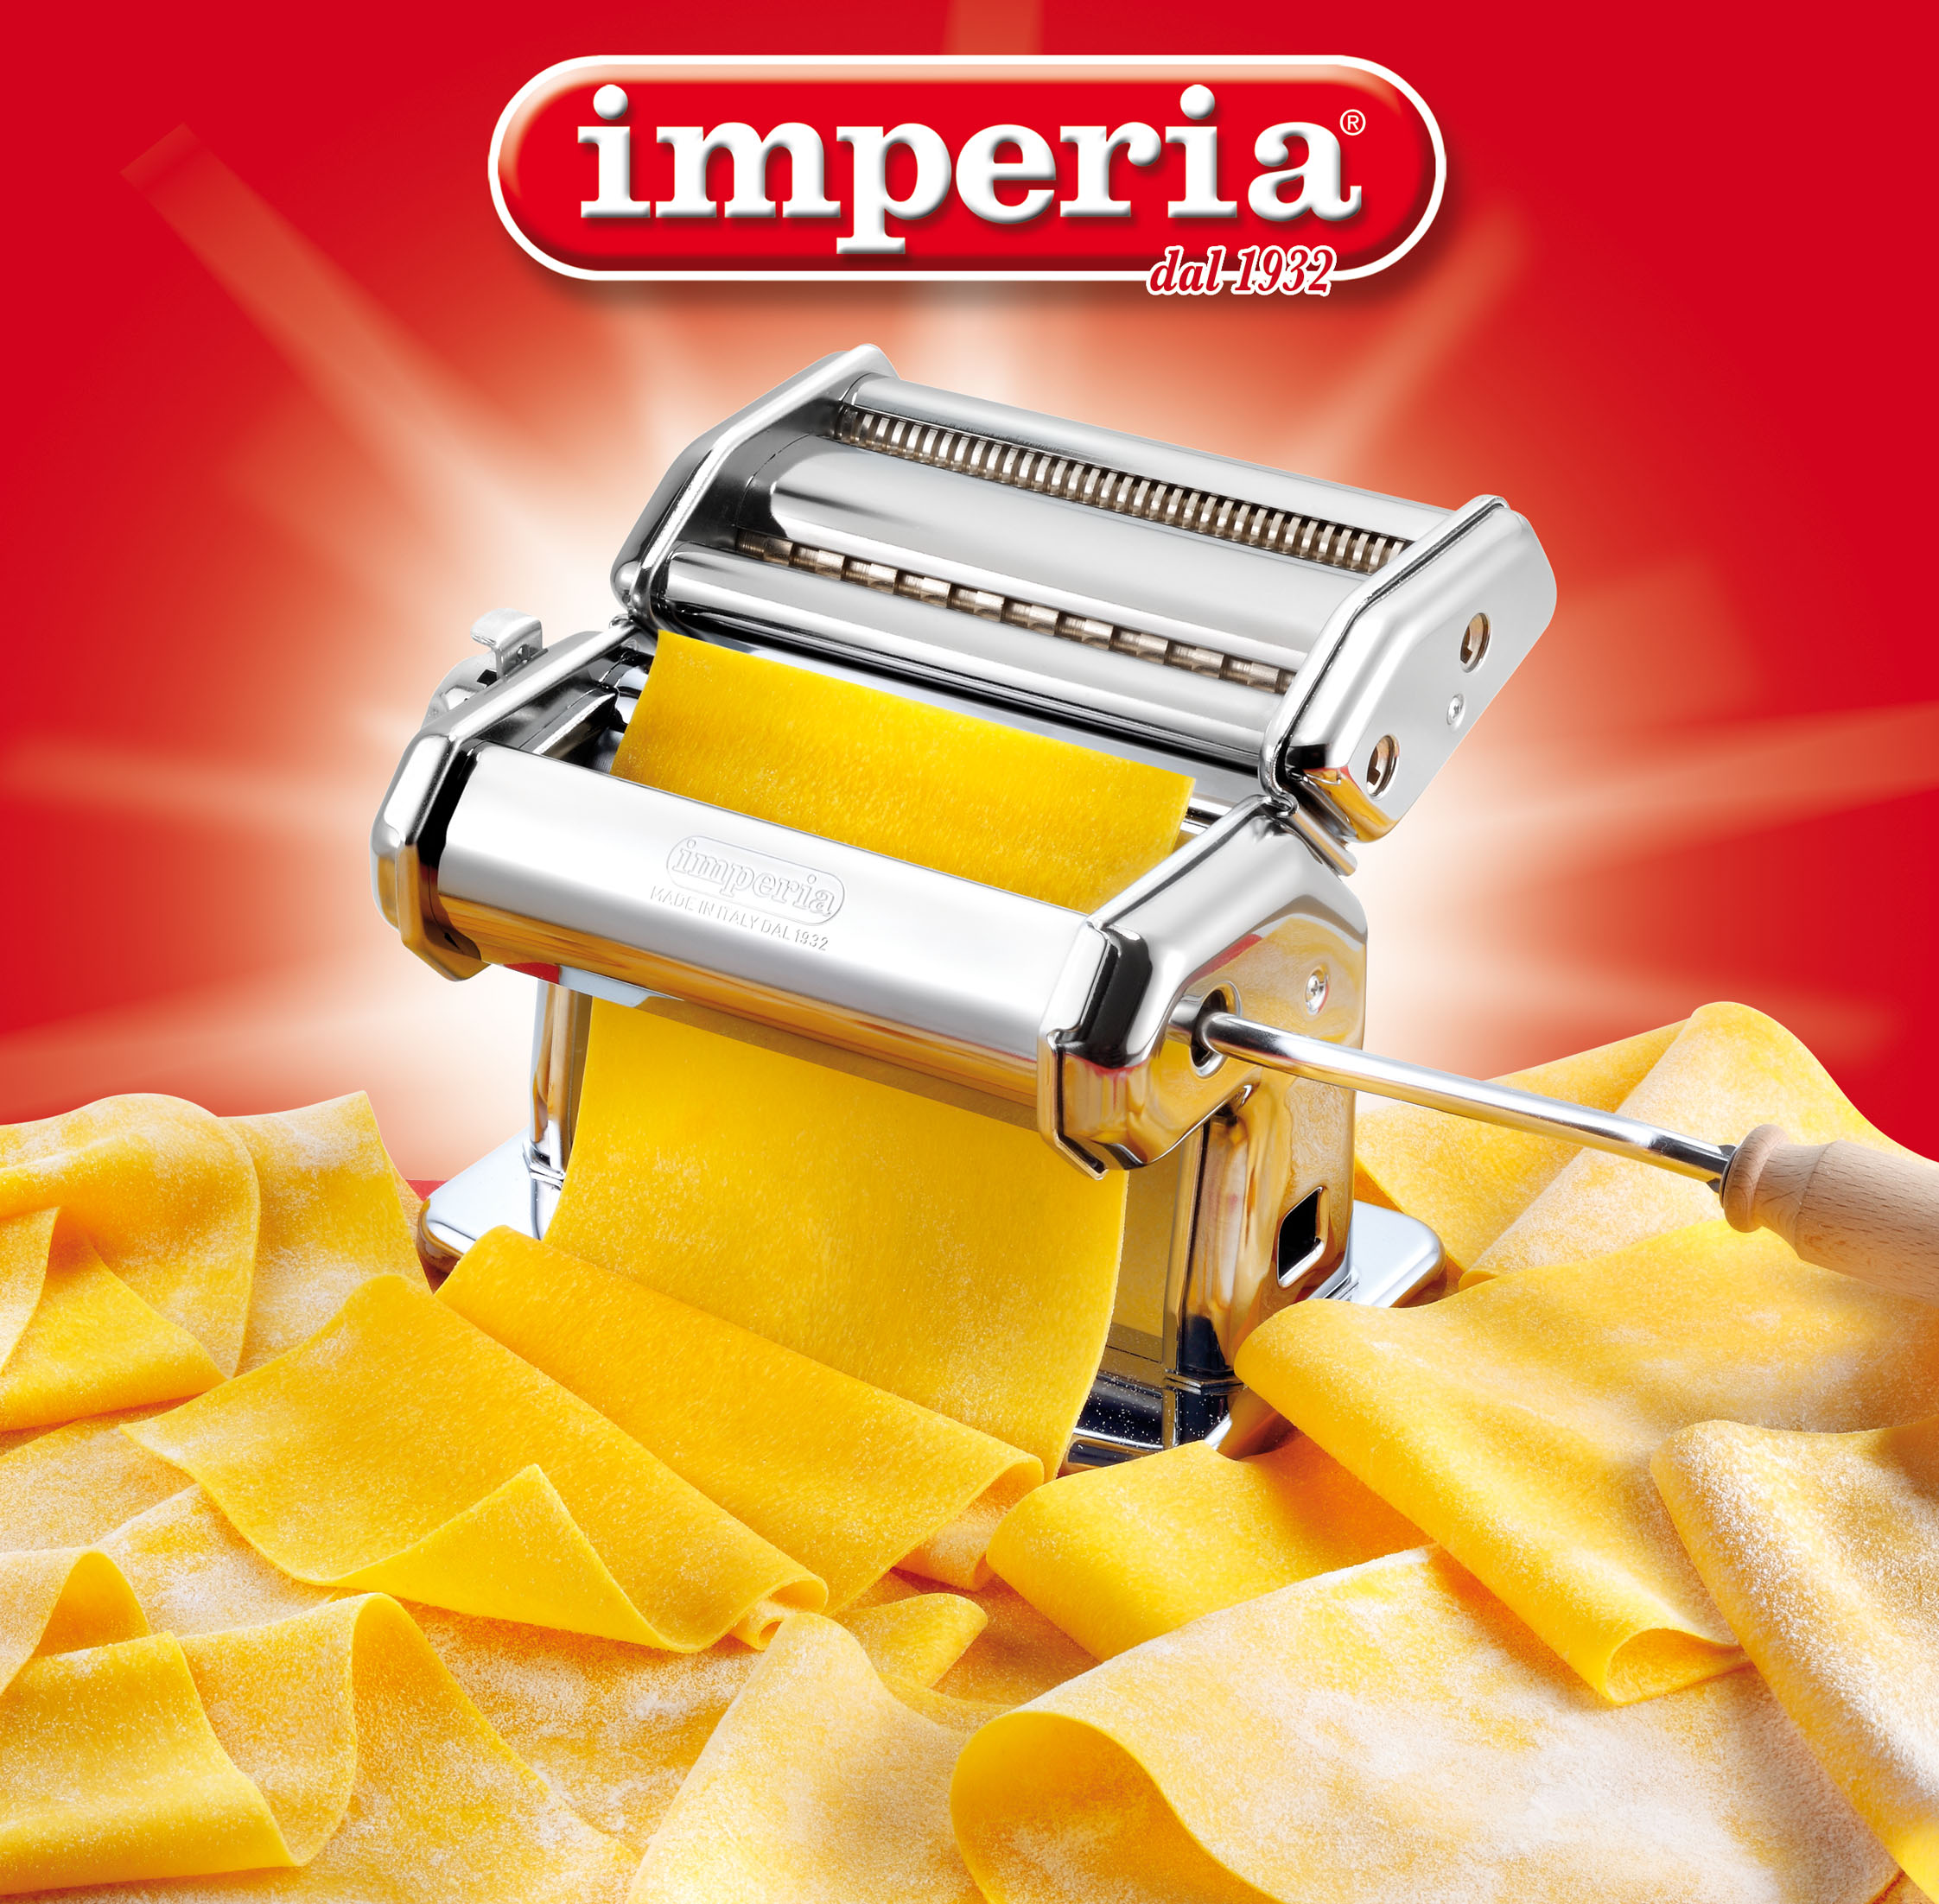 Imperia Pasta Maker Instructions